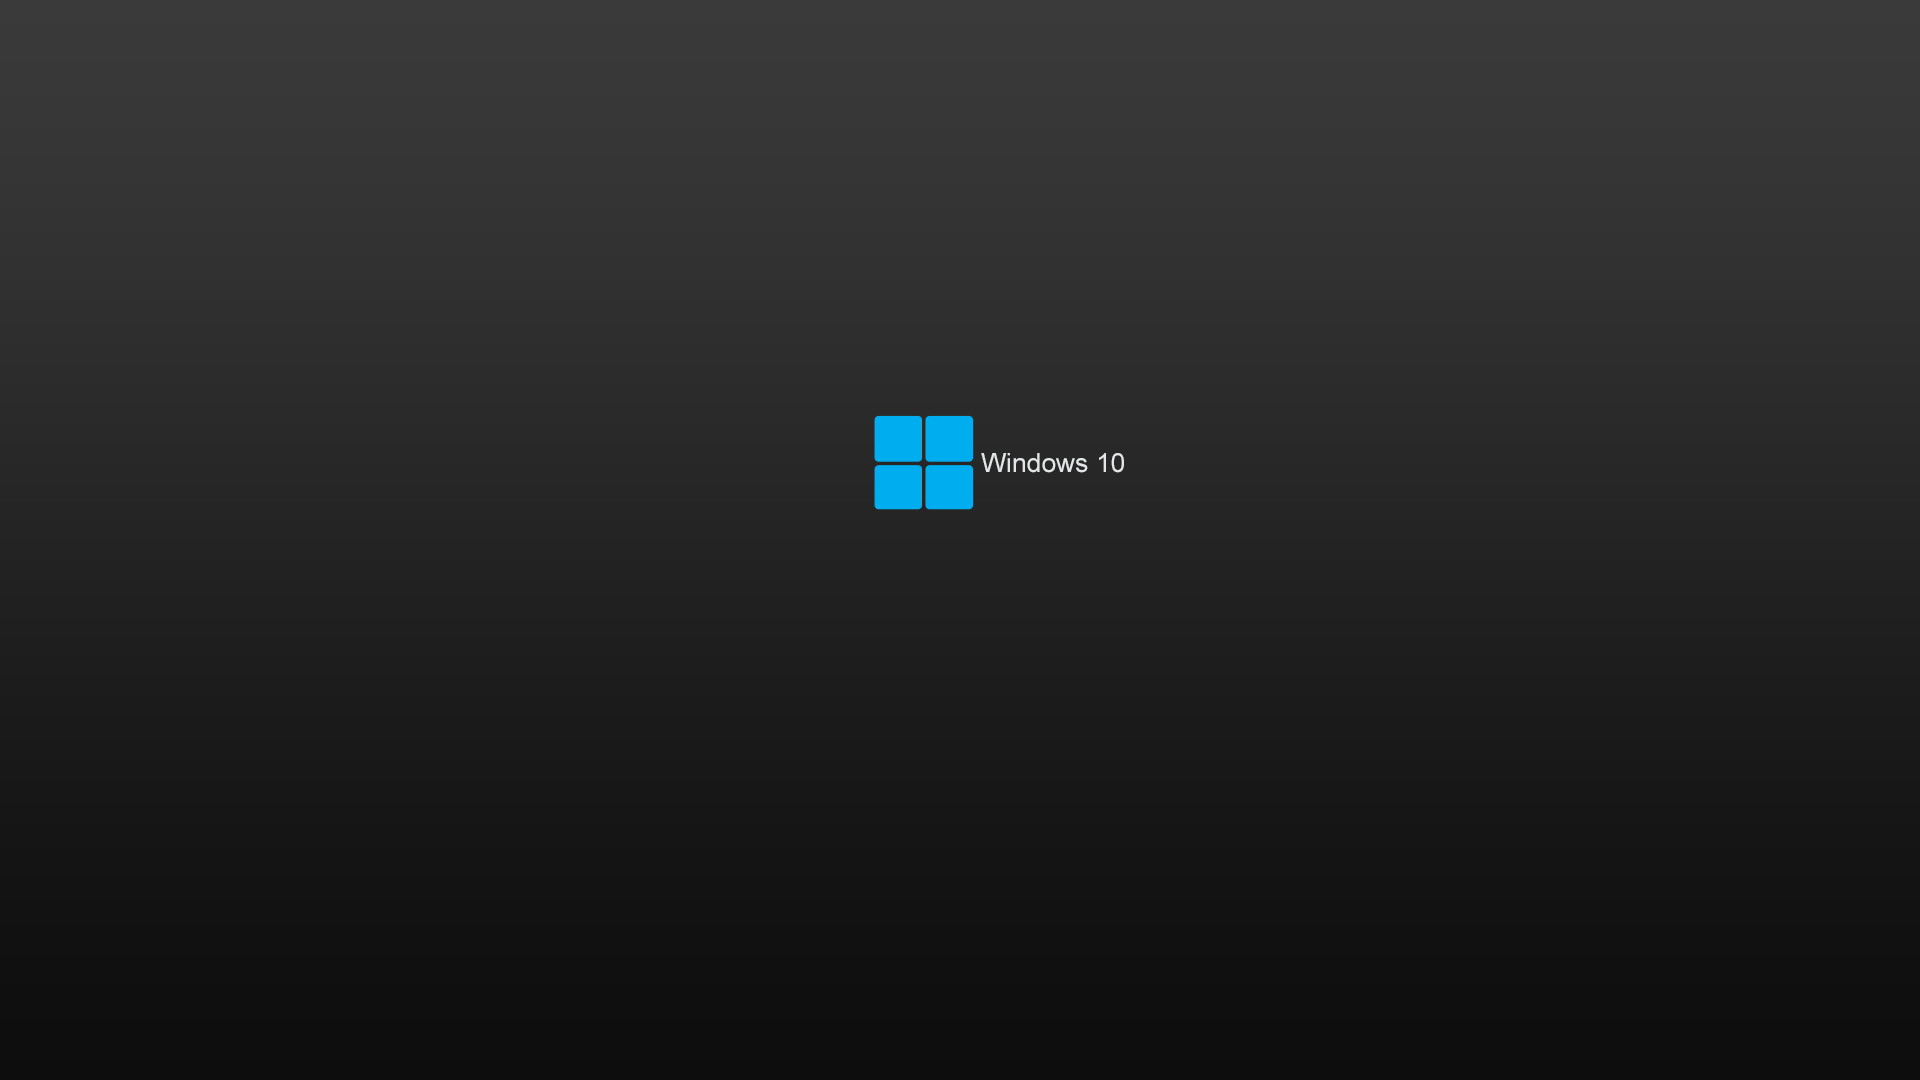 Windows 10 Black Wallpaper (67+ Images)